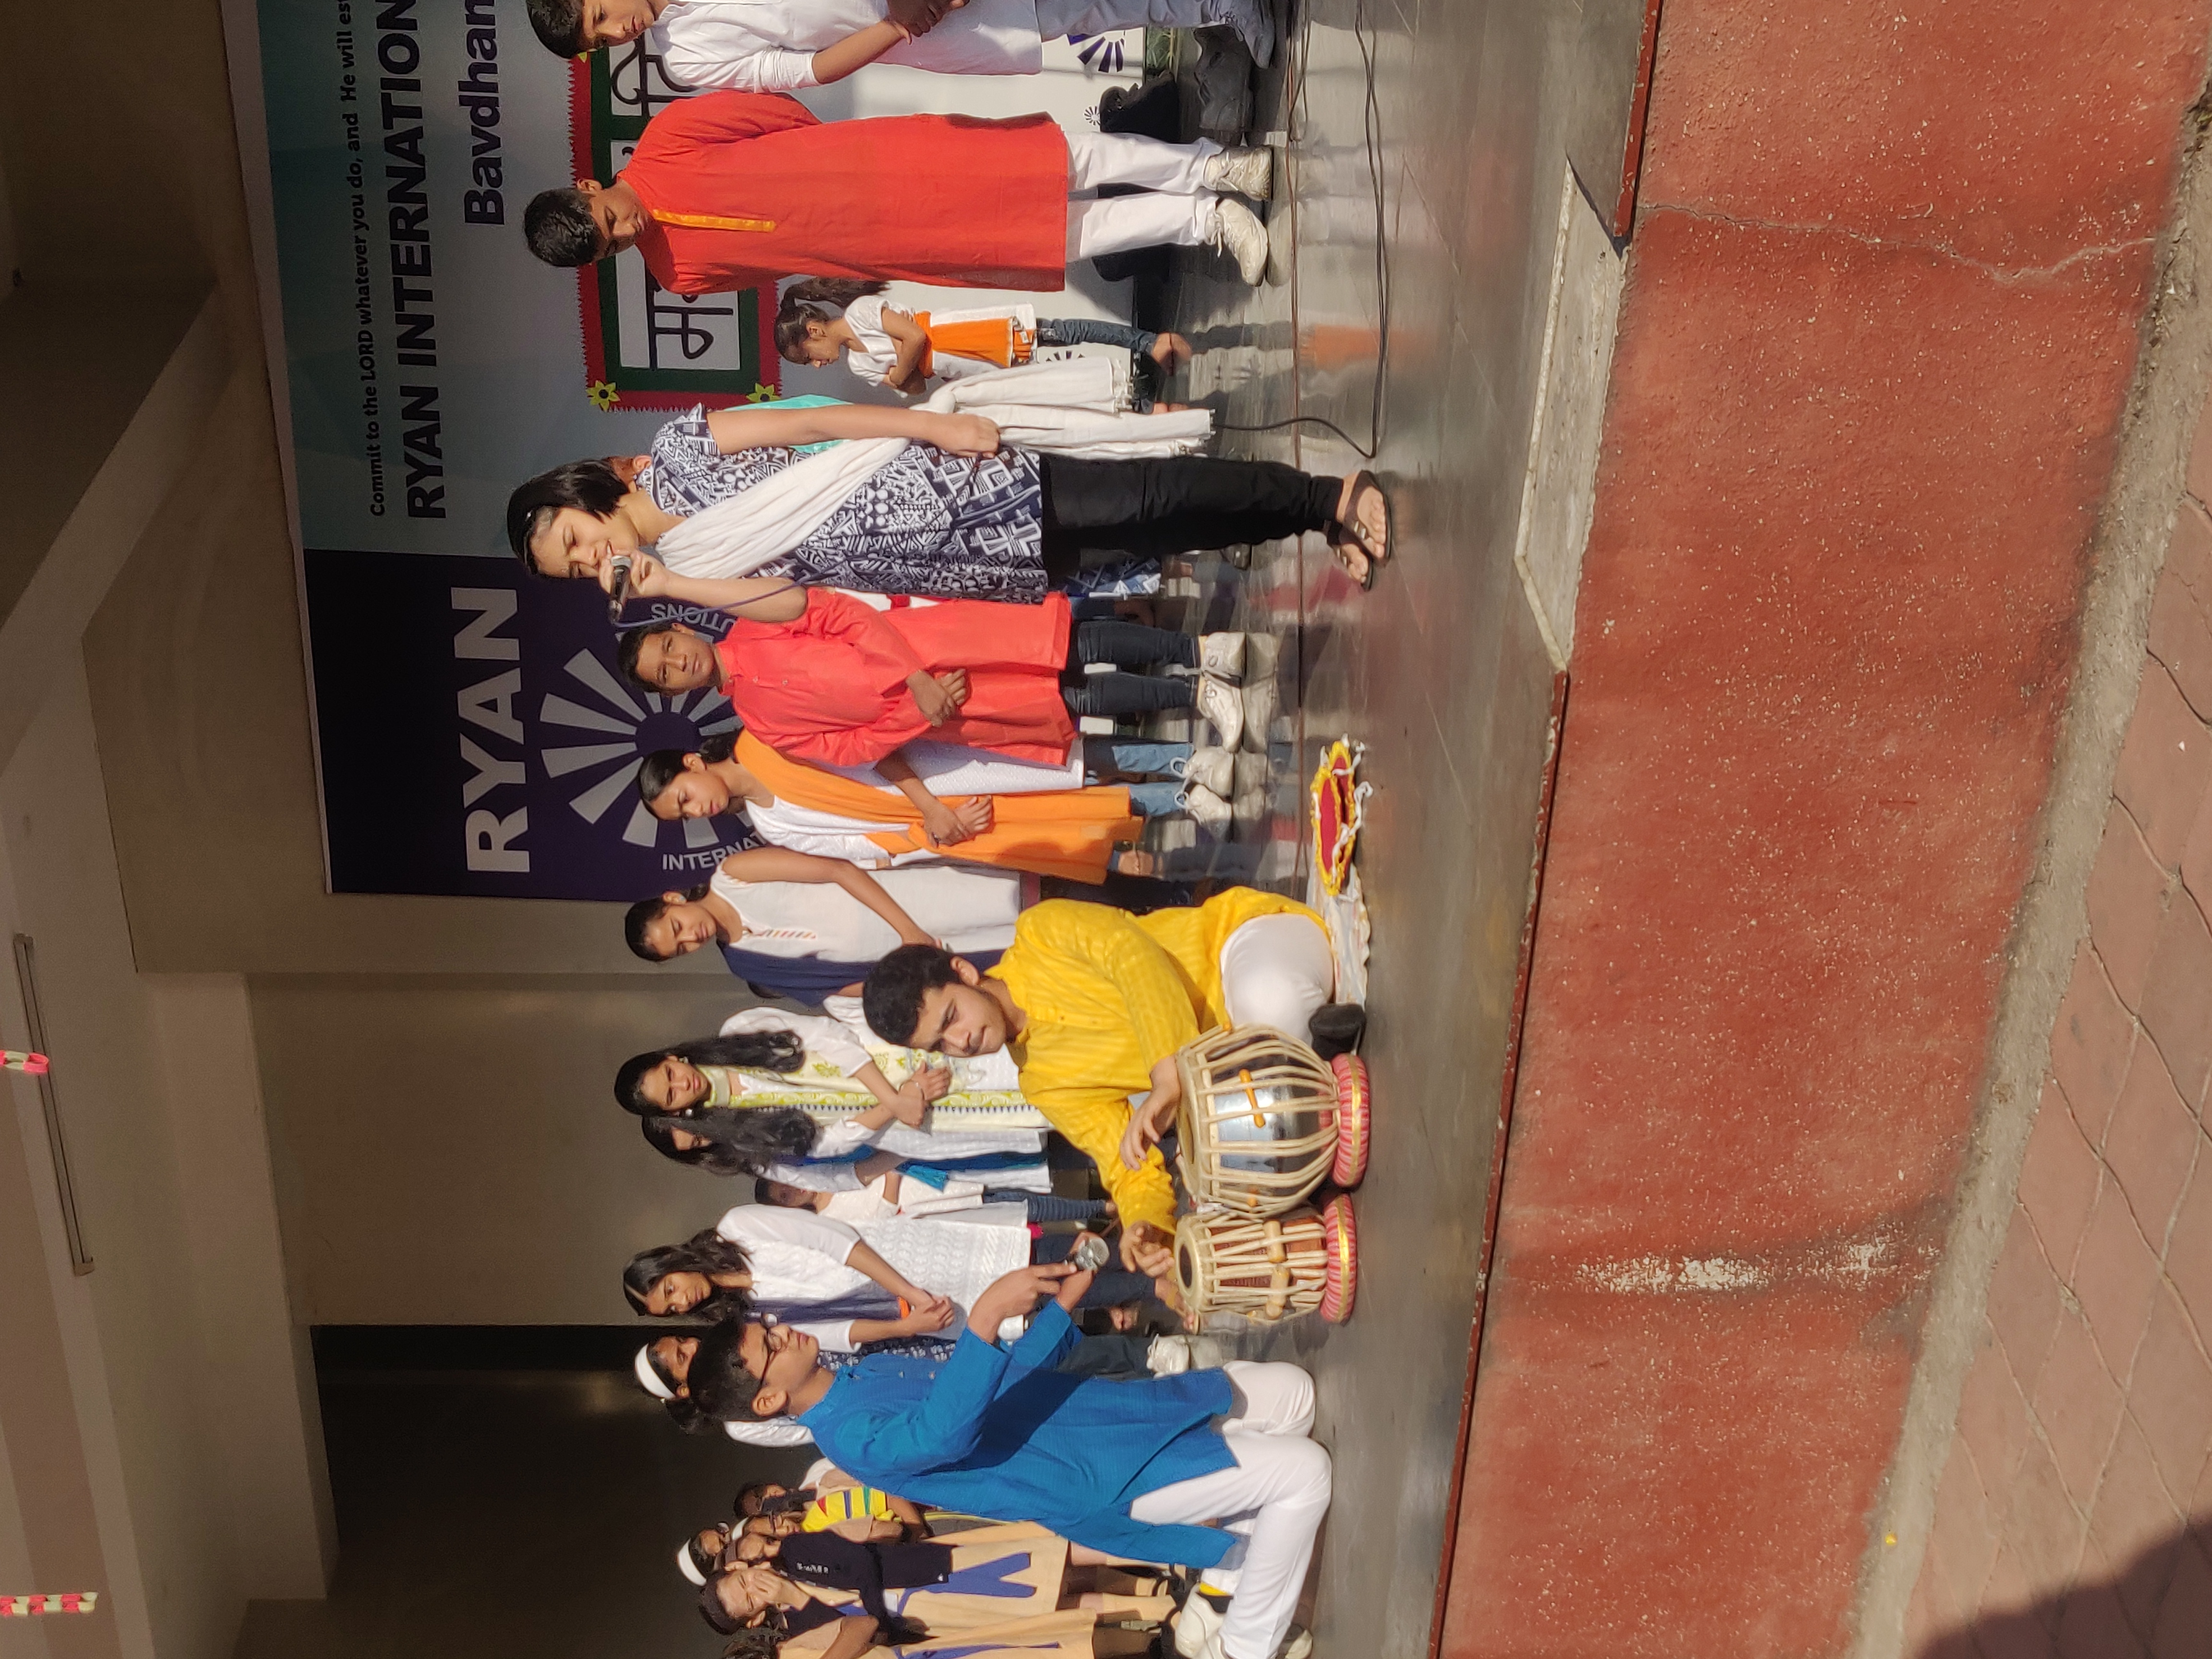 Marathi Diwas - Ryan International School, Bavdhan